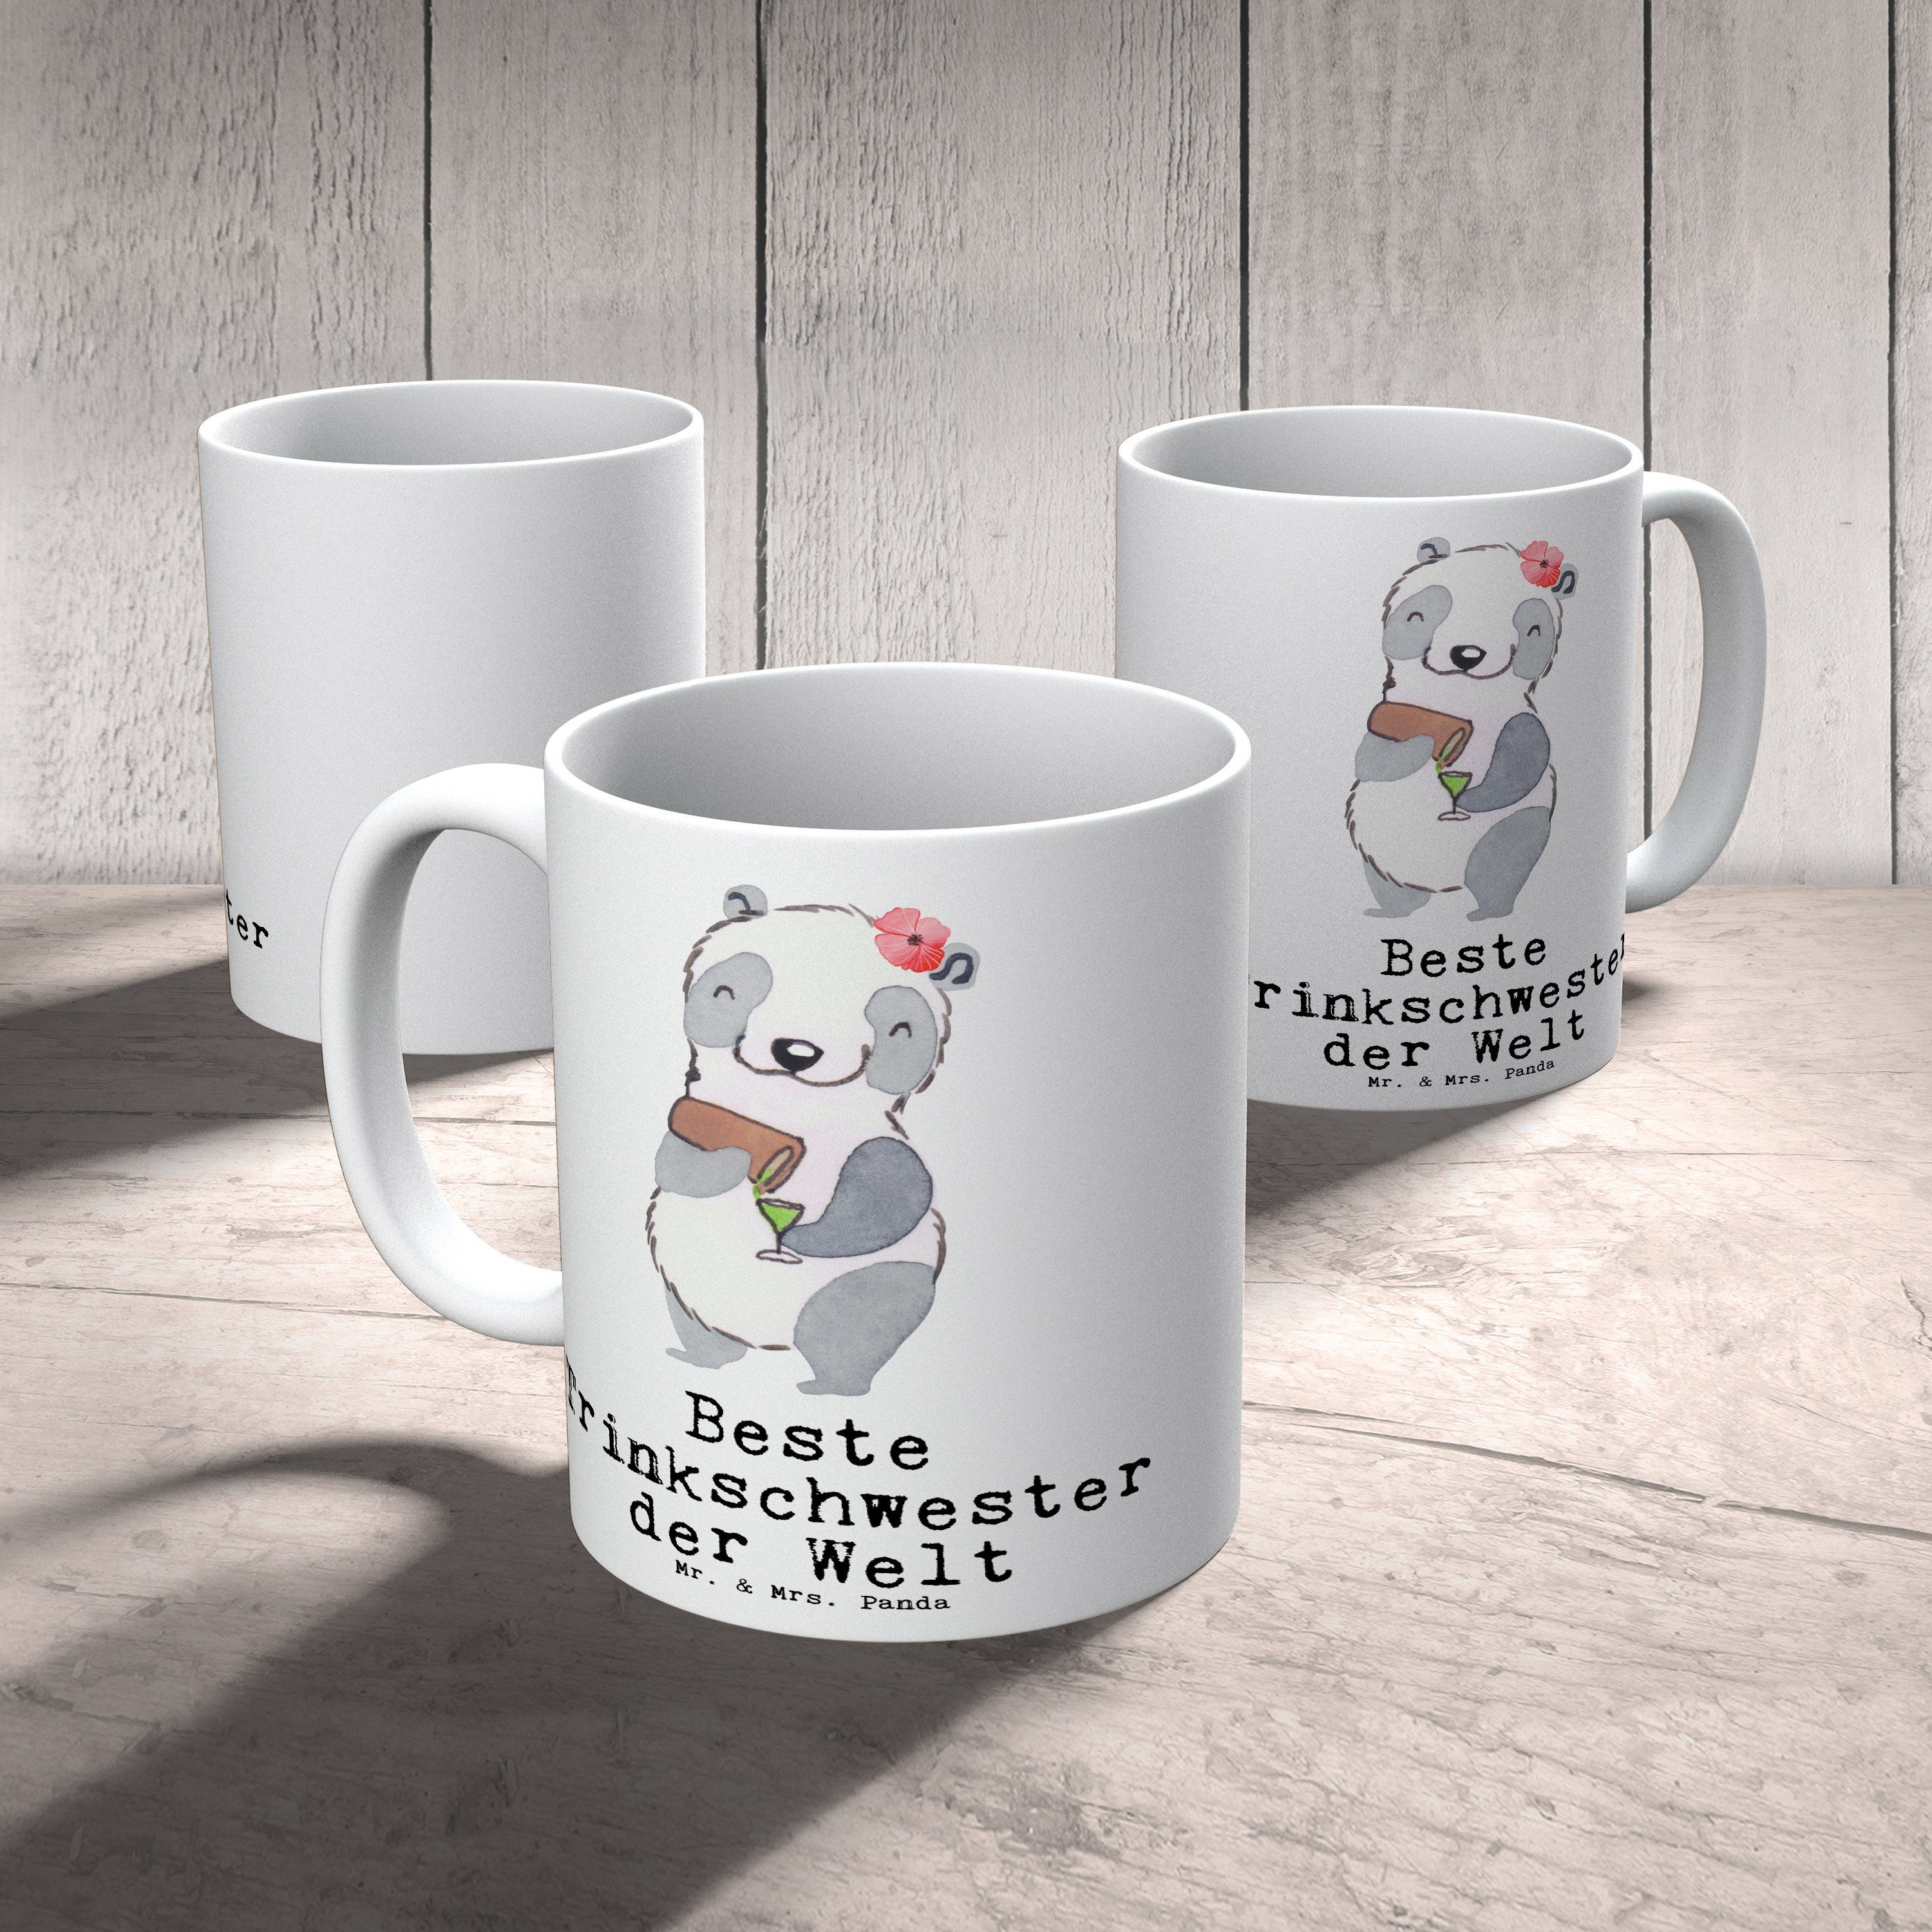 Tee, & Kleinigkeit, machen, Keramik Becher, - Kaffeebecher, Saufschwester, Trinkschwester Freundin, Geschenktipp, Panda Geschenk, Mr. der Weiß Beste Mrs. - Welt Freude Panda Tasse